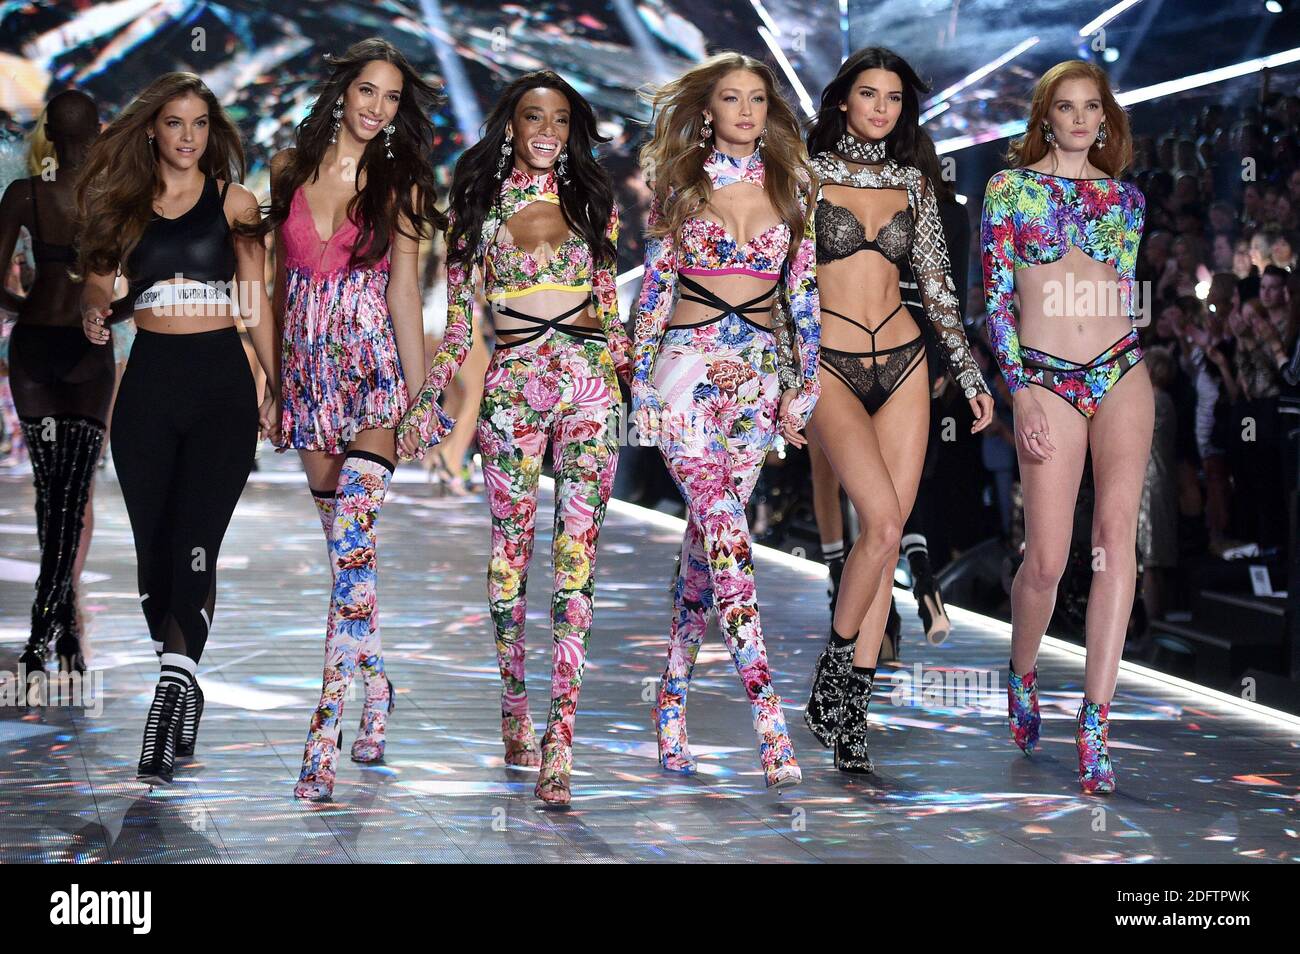 Barbara Palvin, Yasmin Wijnaldum, Winnie Harlow, Gigi Hadid, Kendall Jenner,  Alexina Graham walk the runway during the 2018 Victoria's Secret Fashion  Show at Pier 94 on November 8, 2018 in New York